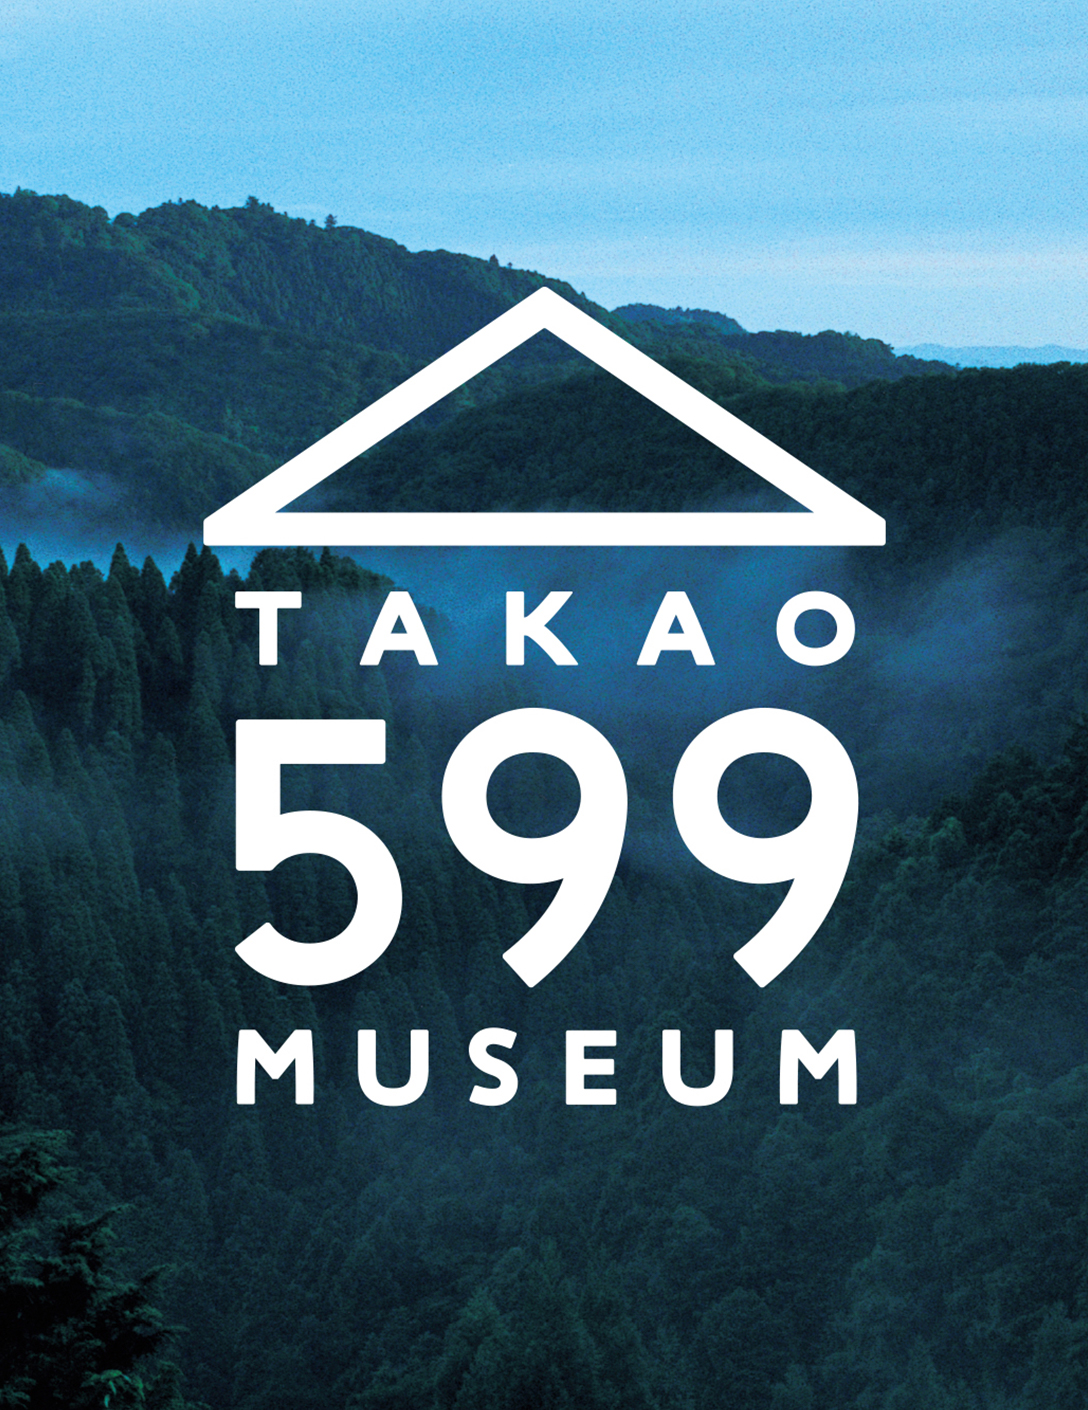 TAKAO 599 MUSEUM